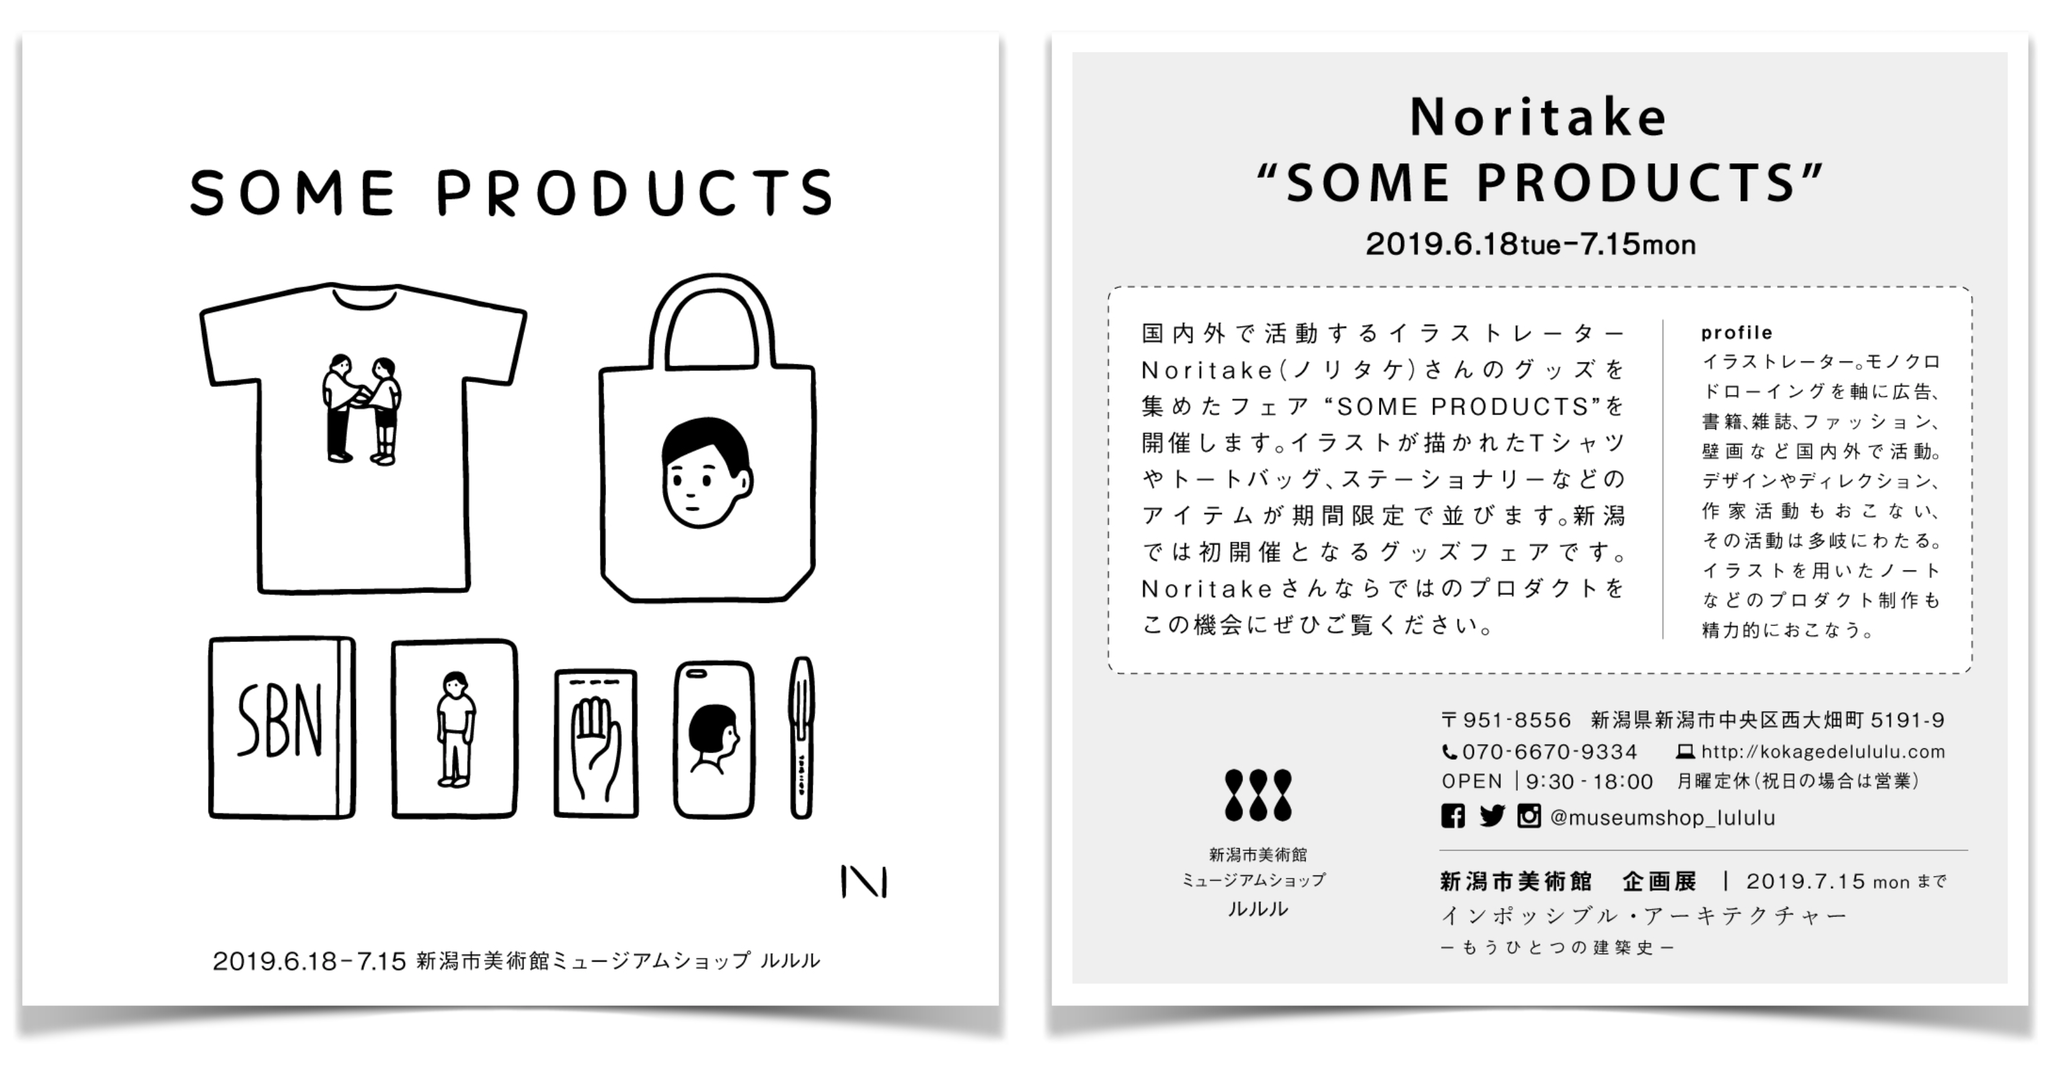 Noritakeグッズフェア Some Products 開催中 新潟市美術館ミュージアムショップ ルルル